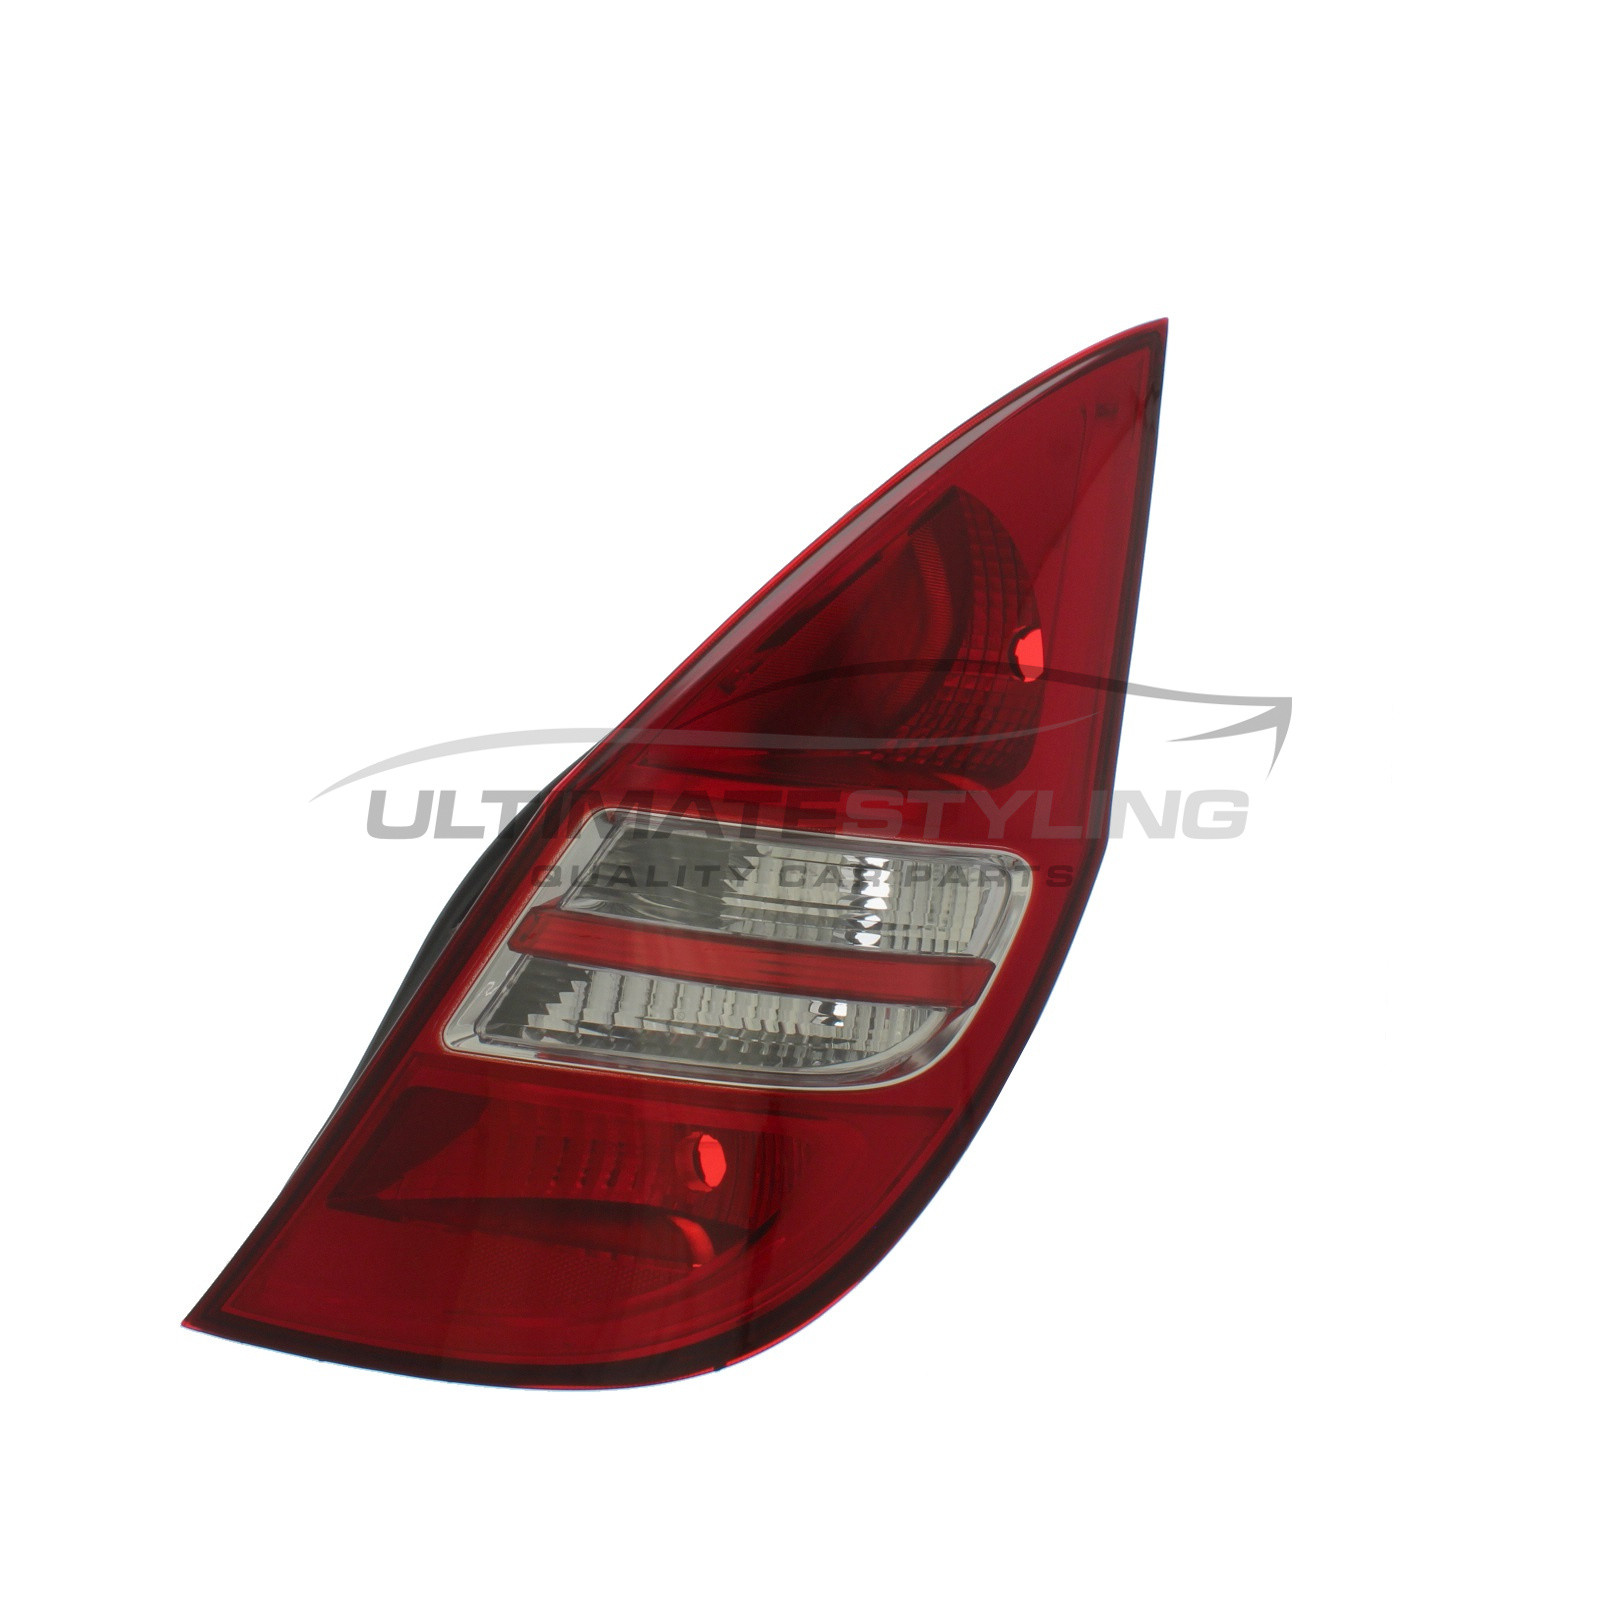 Rear Light / Tail Light for Hyundai i30